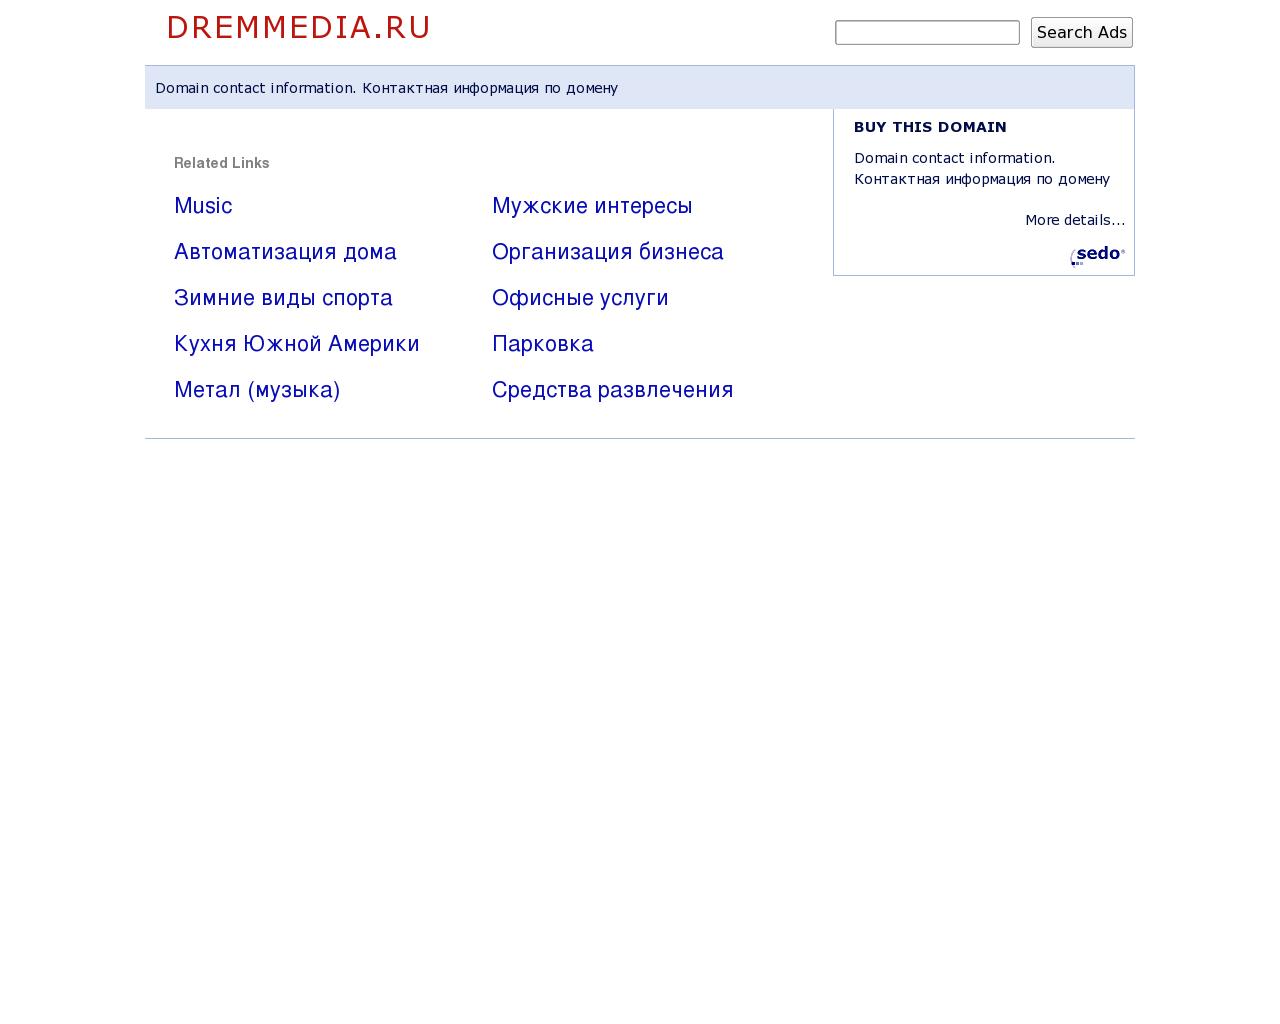 Изображение сайта dremmedia.ru в разрешении 1280x1024